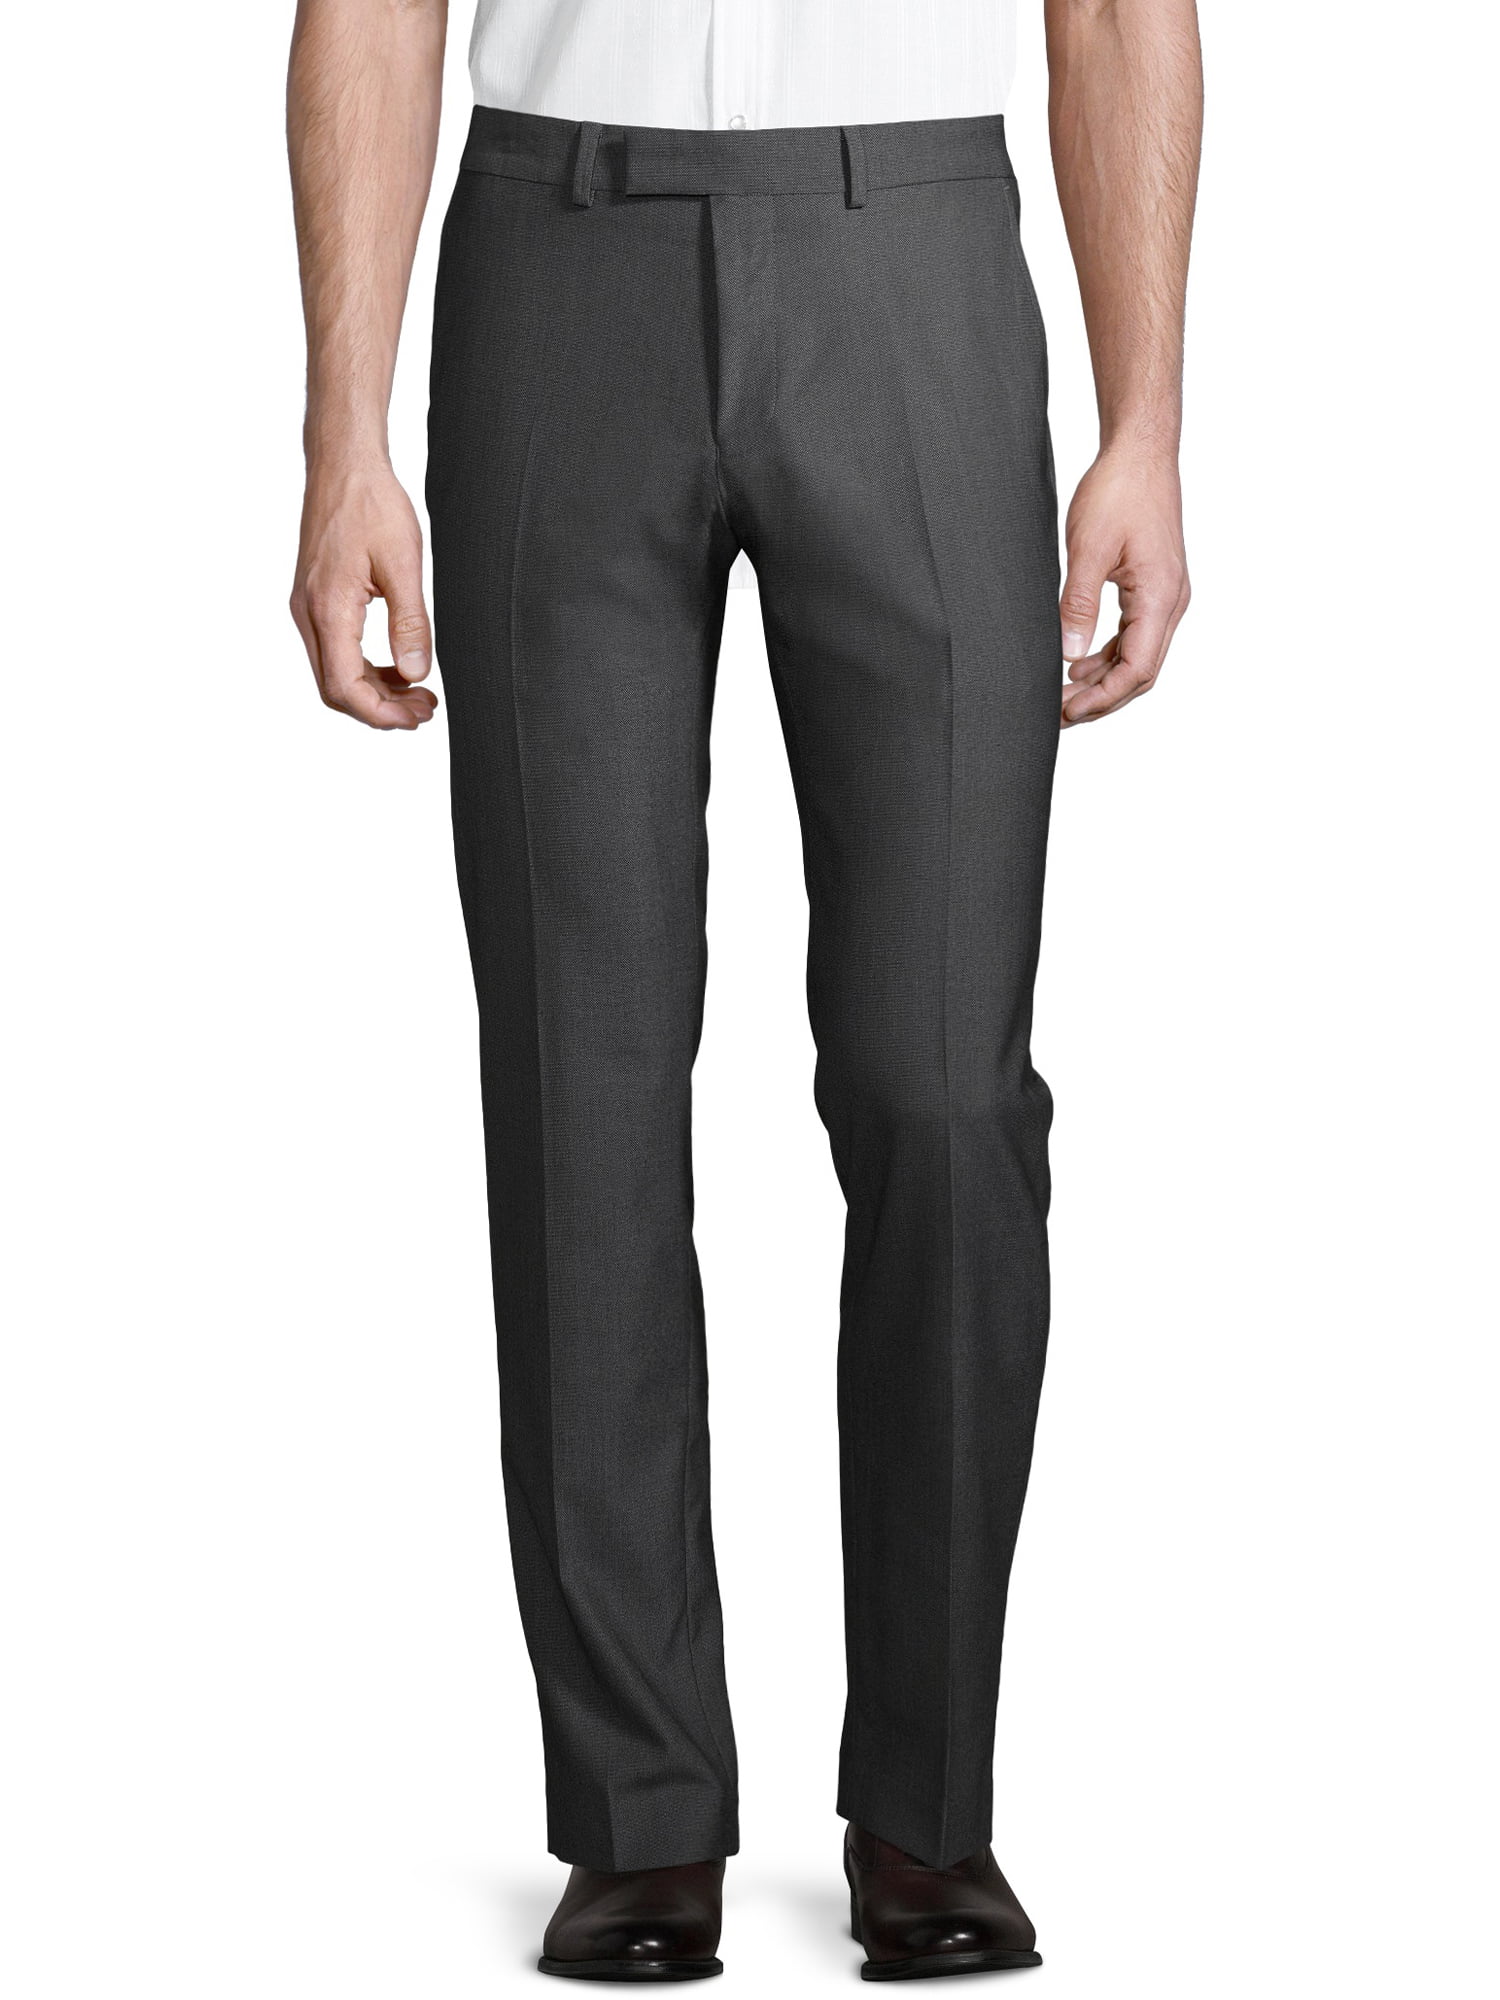 Billy London Suit Separate Pants - Walmart.com